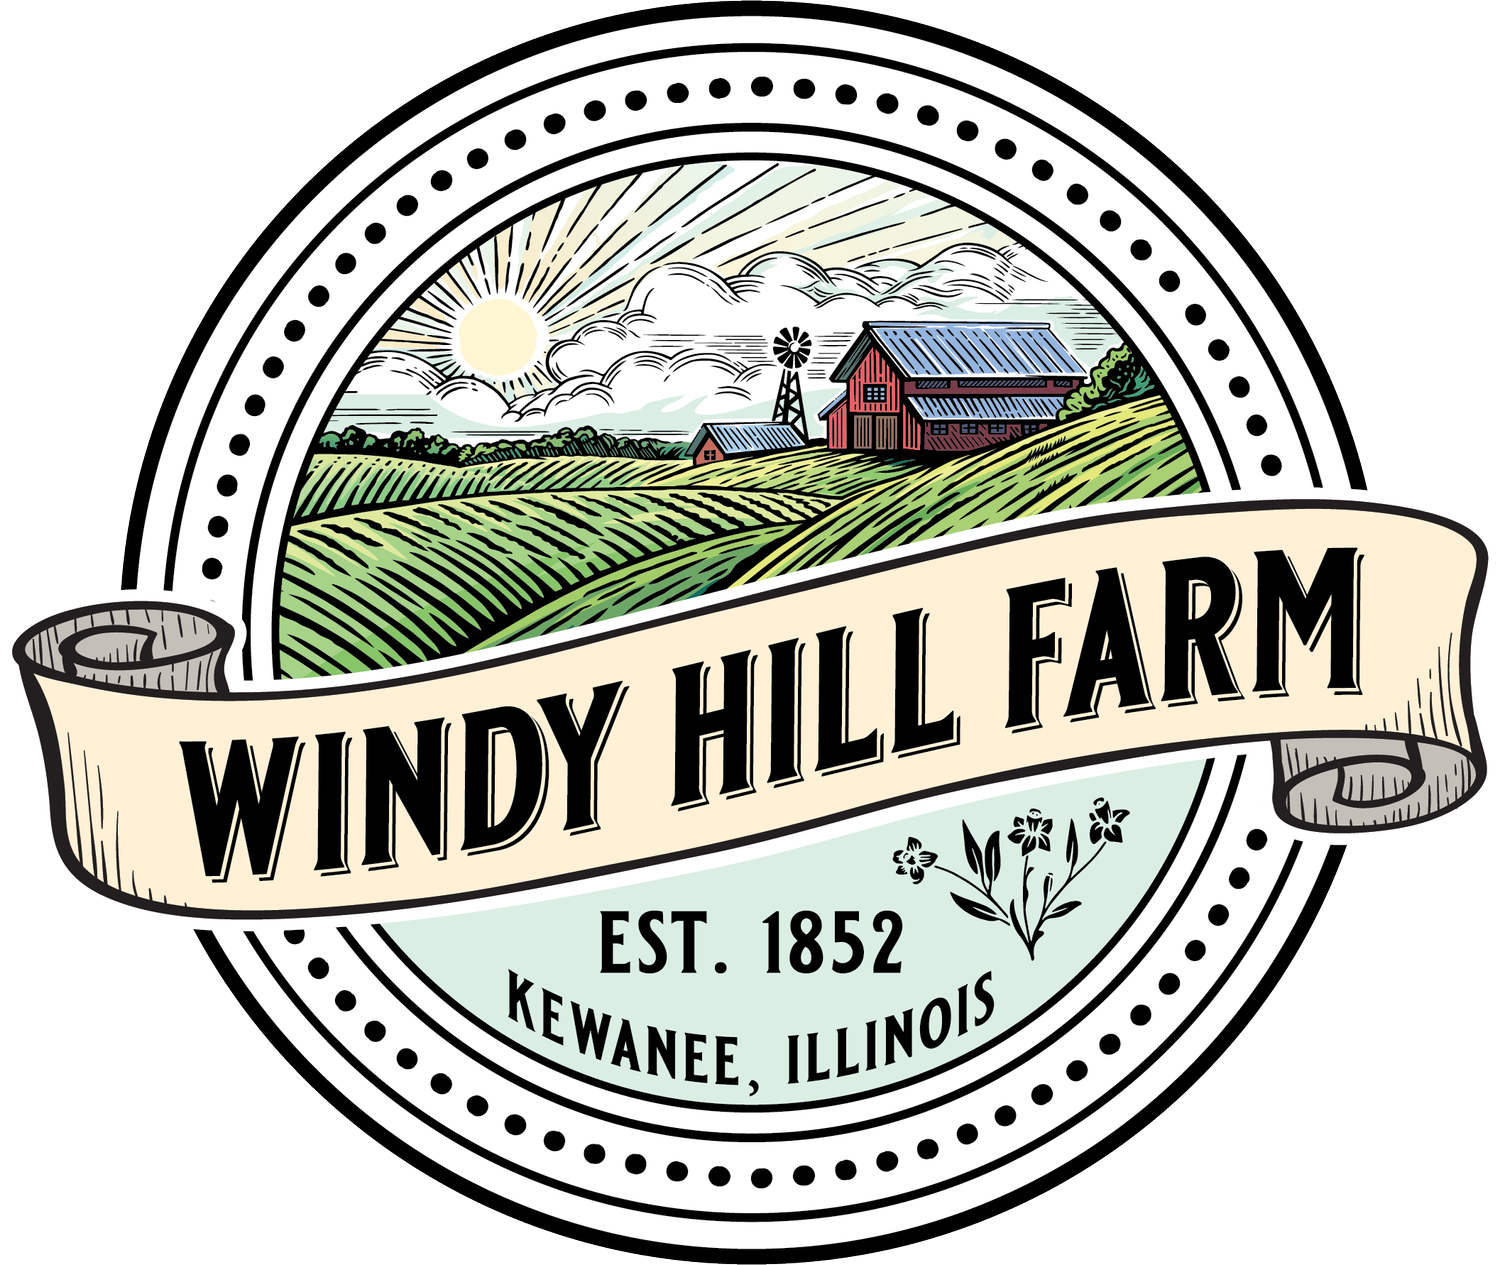 WINDY HILL FARM EST. 1852